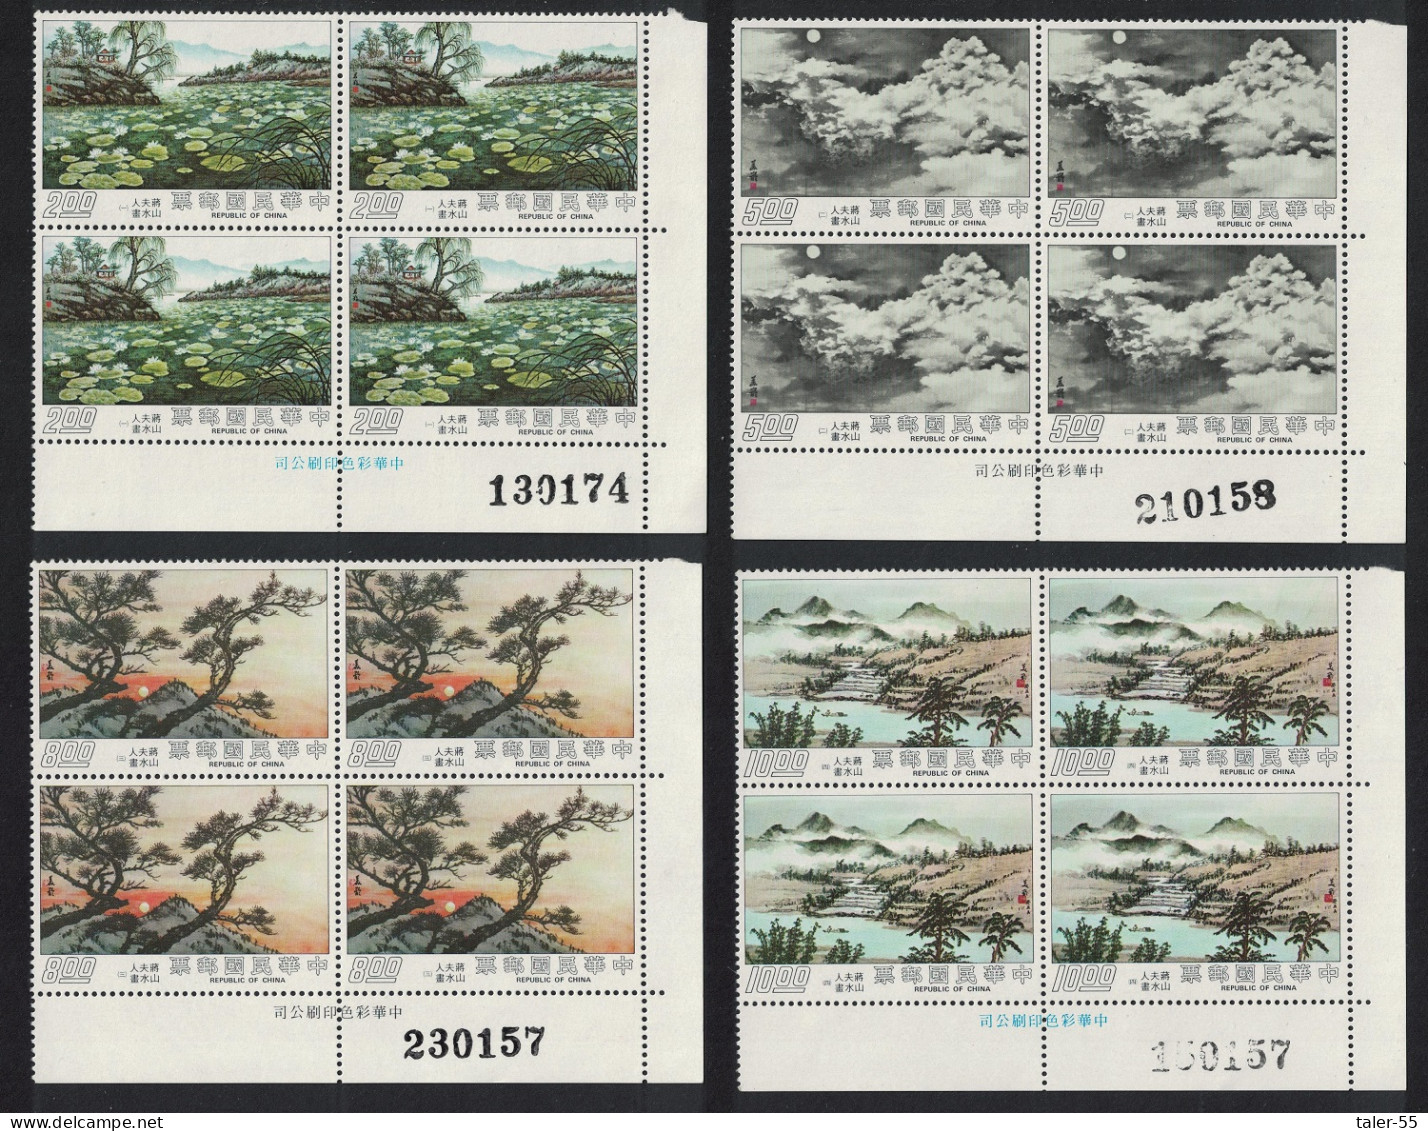 Taiwan Madame Chiang Kai-shek's Paintings 4v Corner Blocks Of 4 1975 MNH SG#1078-1081 - Nuovi